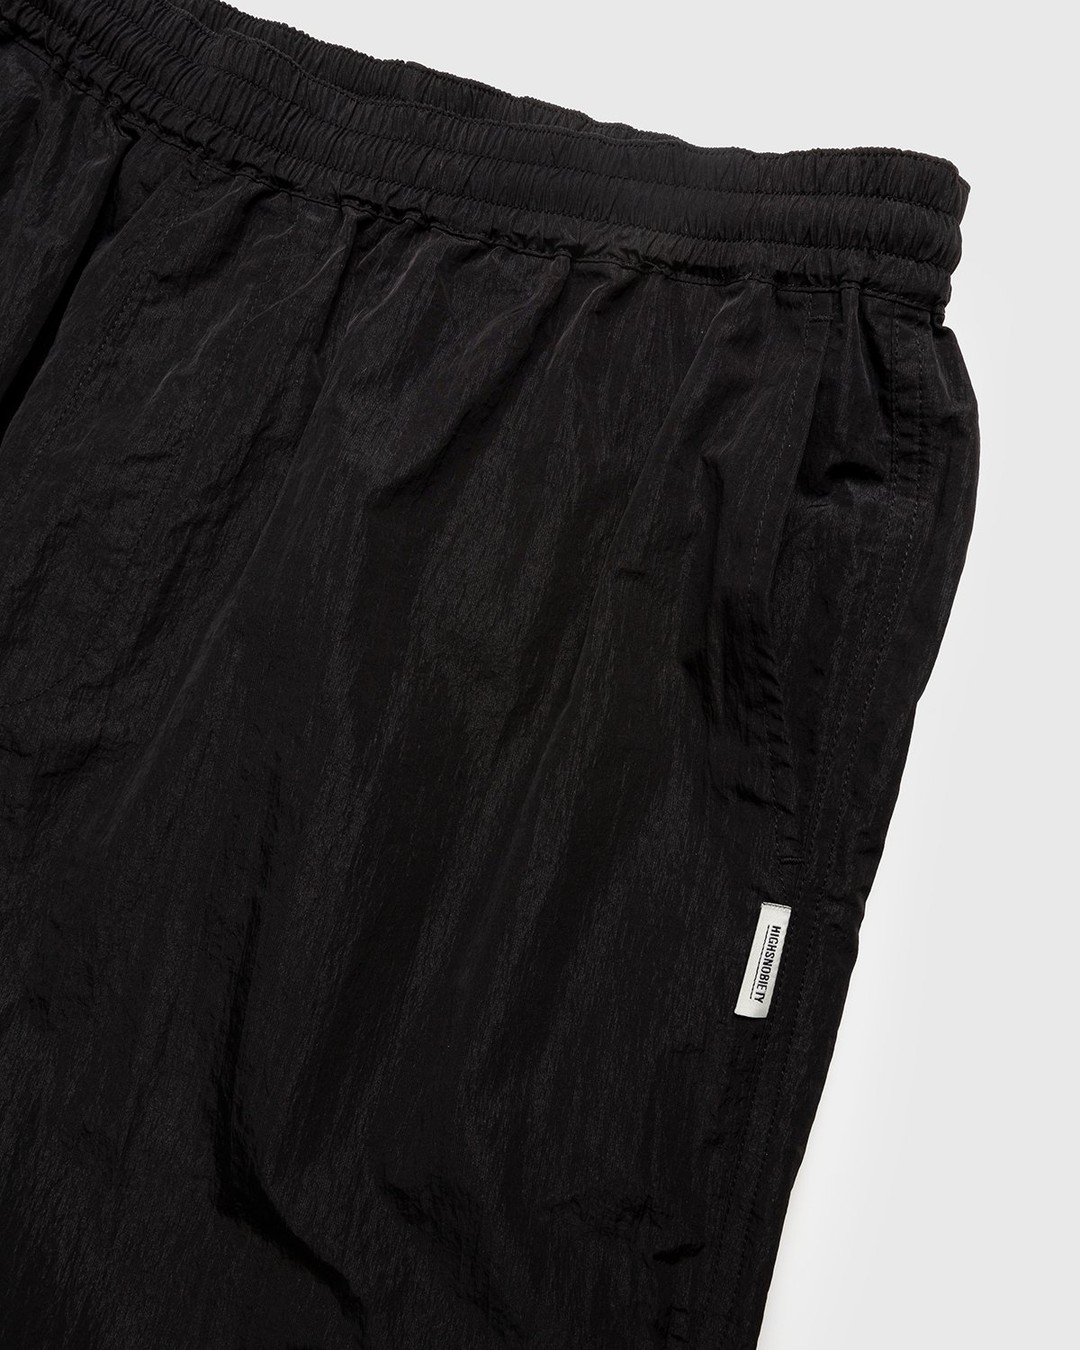 Highsnobiety – Crepe Nylon Elastic Pants Black - Pants - Black - Image 3